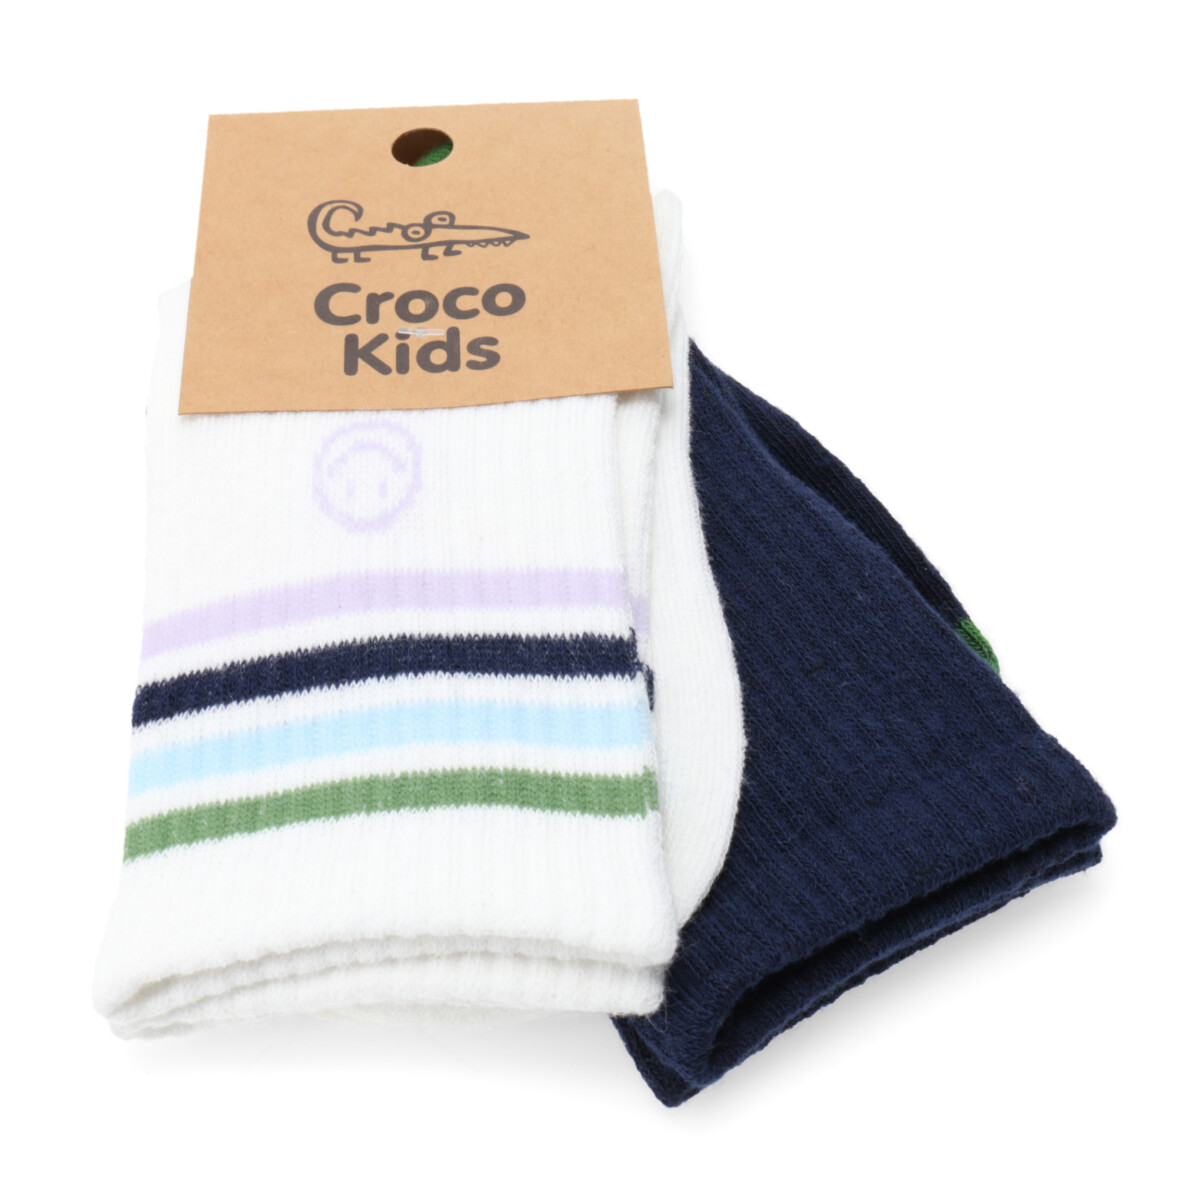 Media Solid/Stripes pack X2 Croco Kids - White/Dk.Blue 